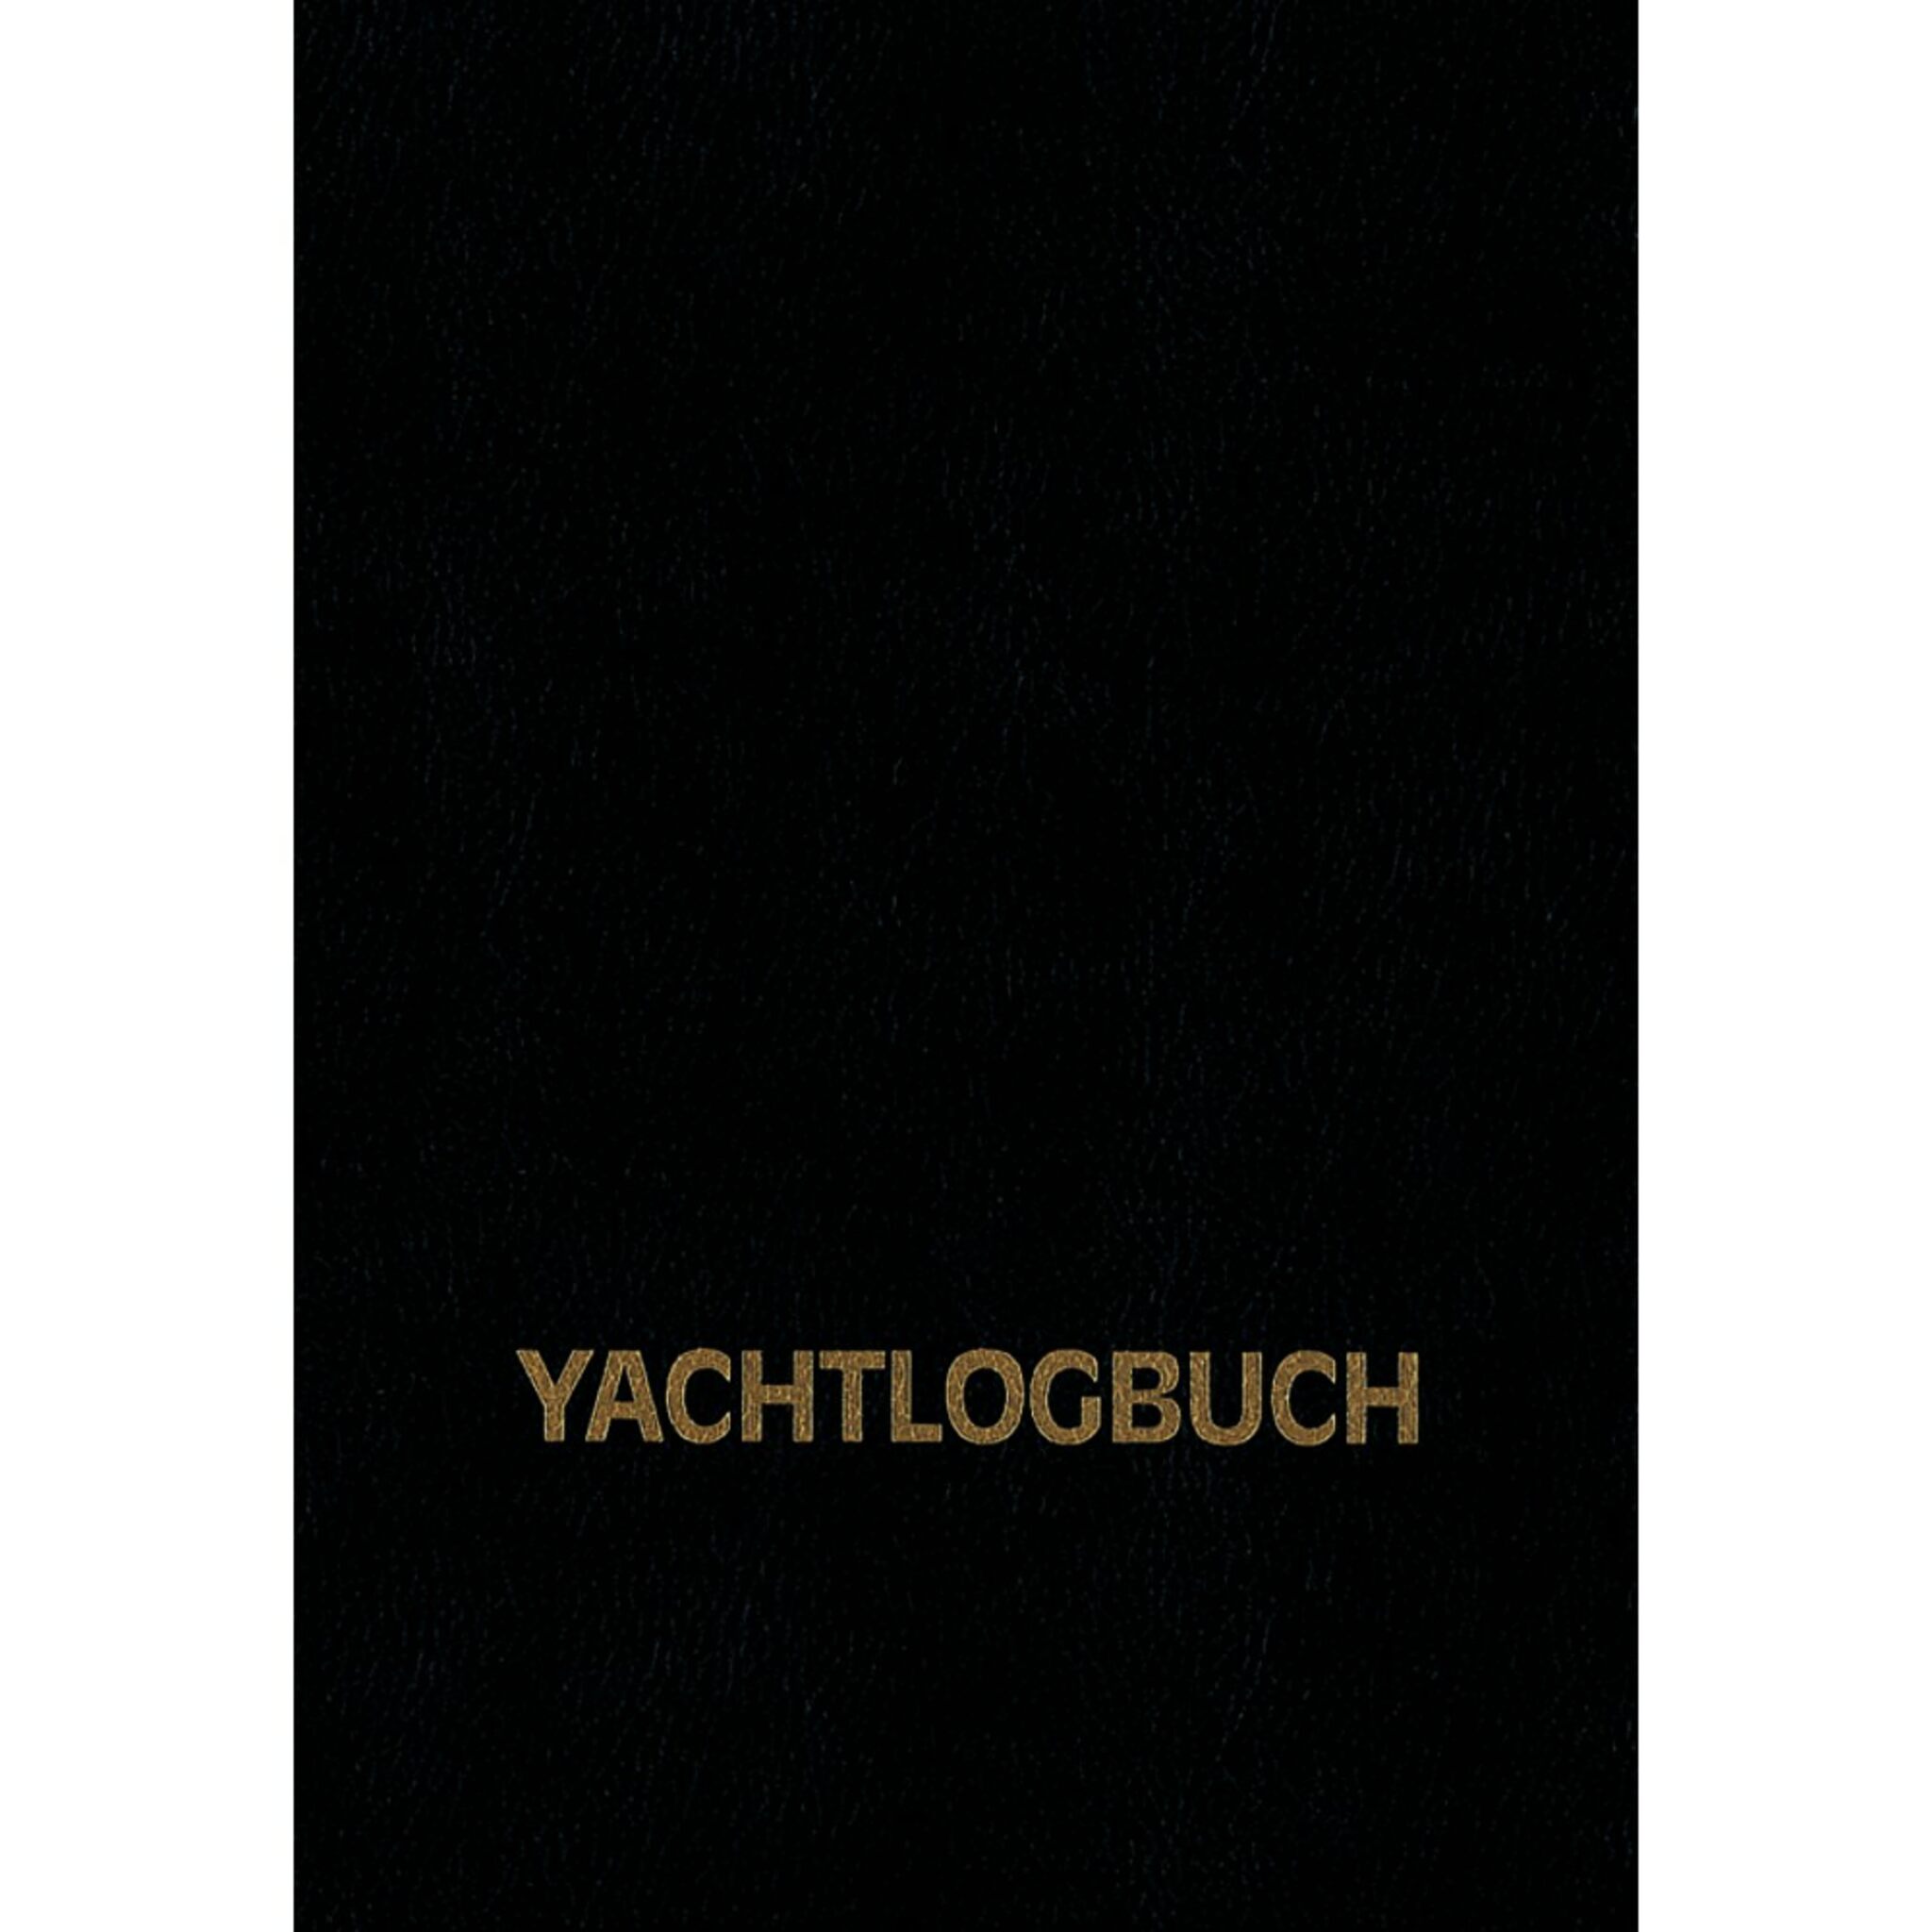 Leatherette yacht log book